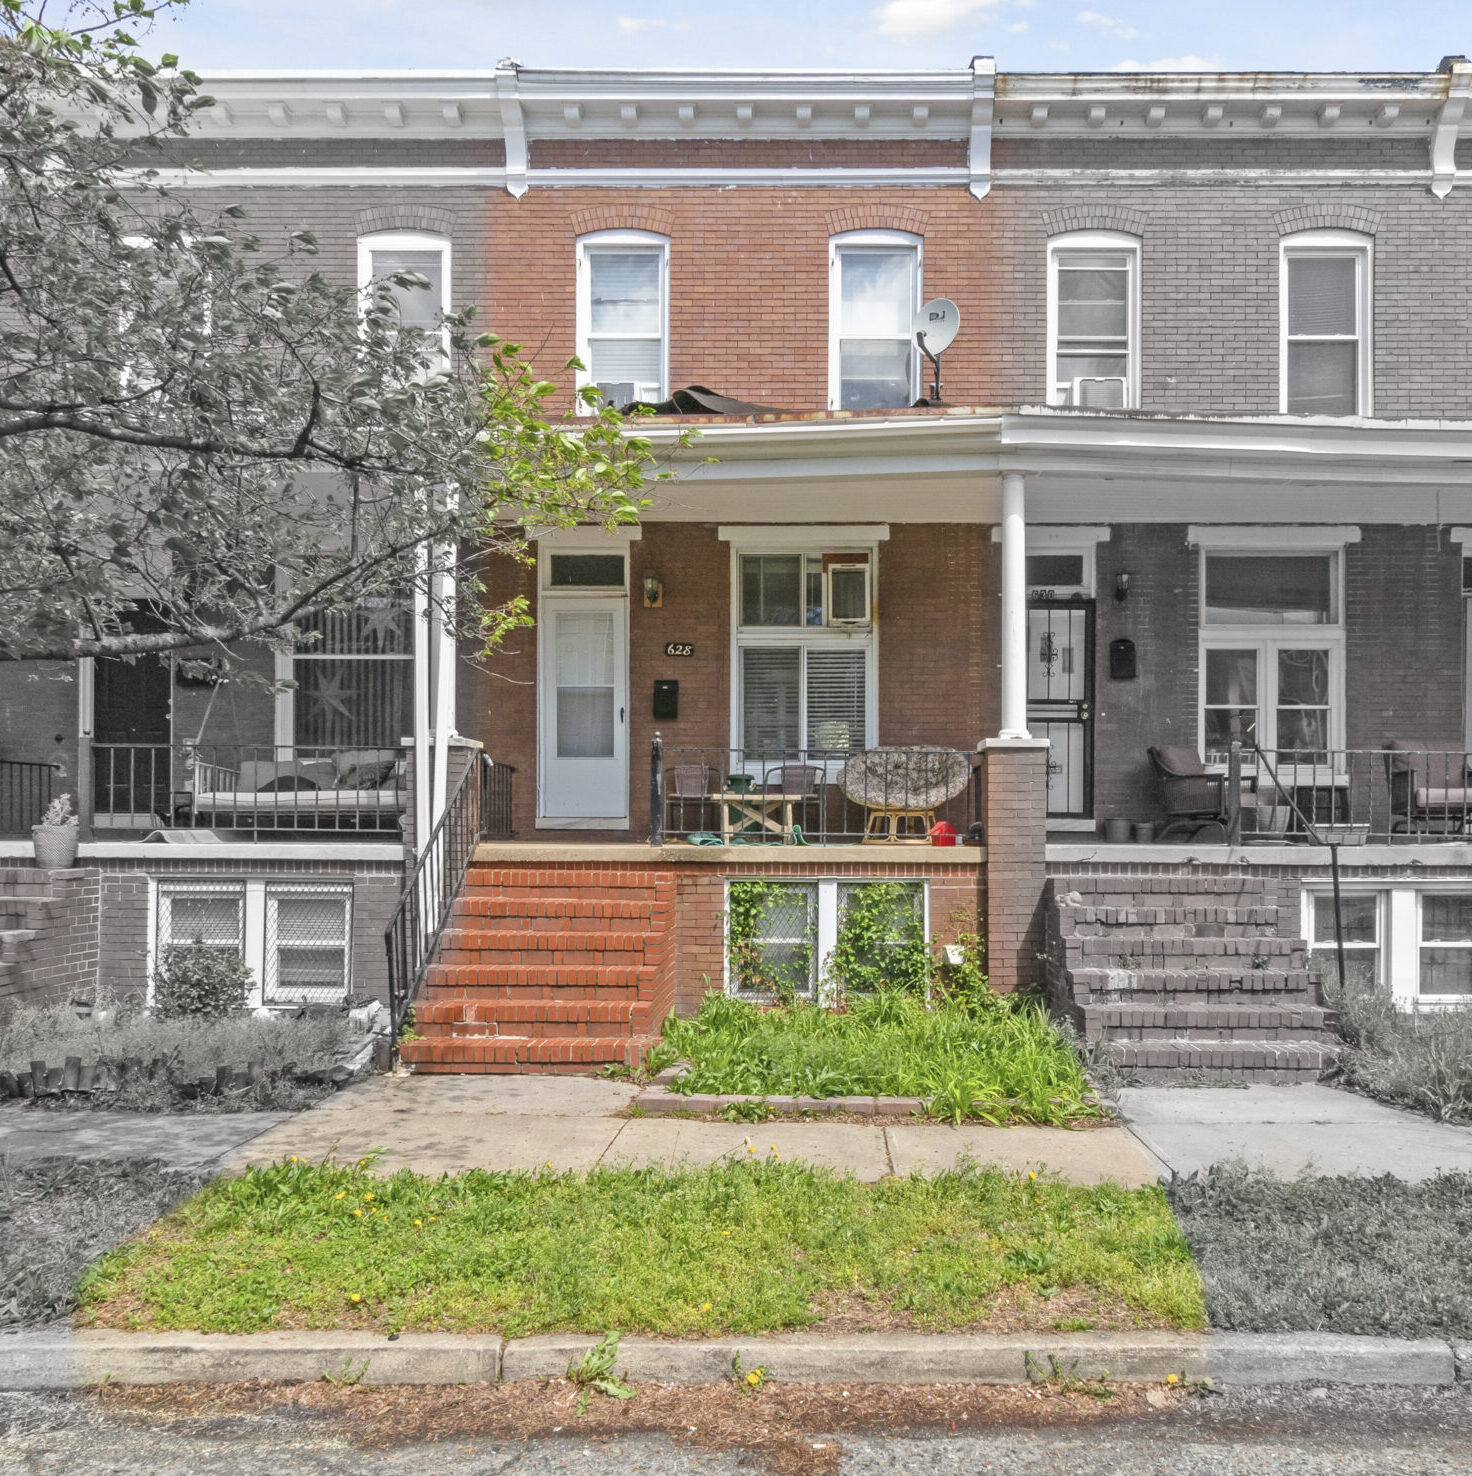 628 East 37th Street: Single Family Rental Home